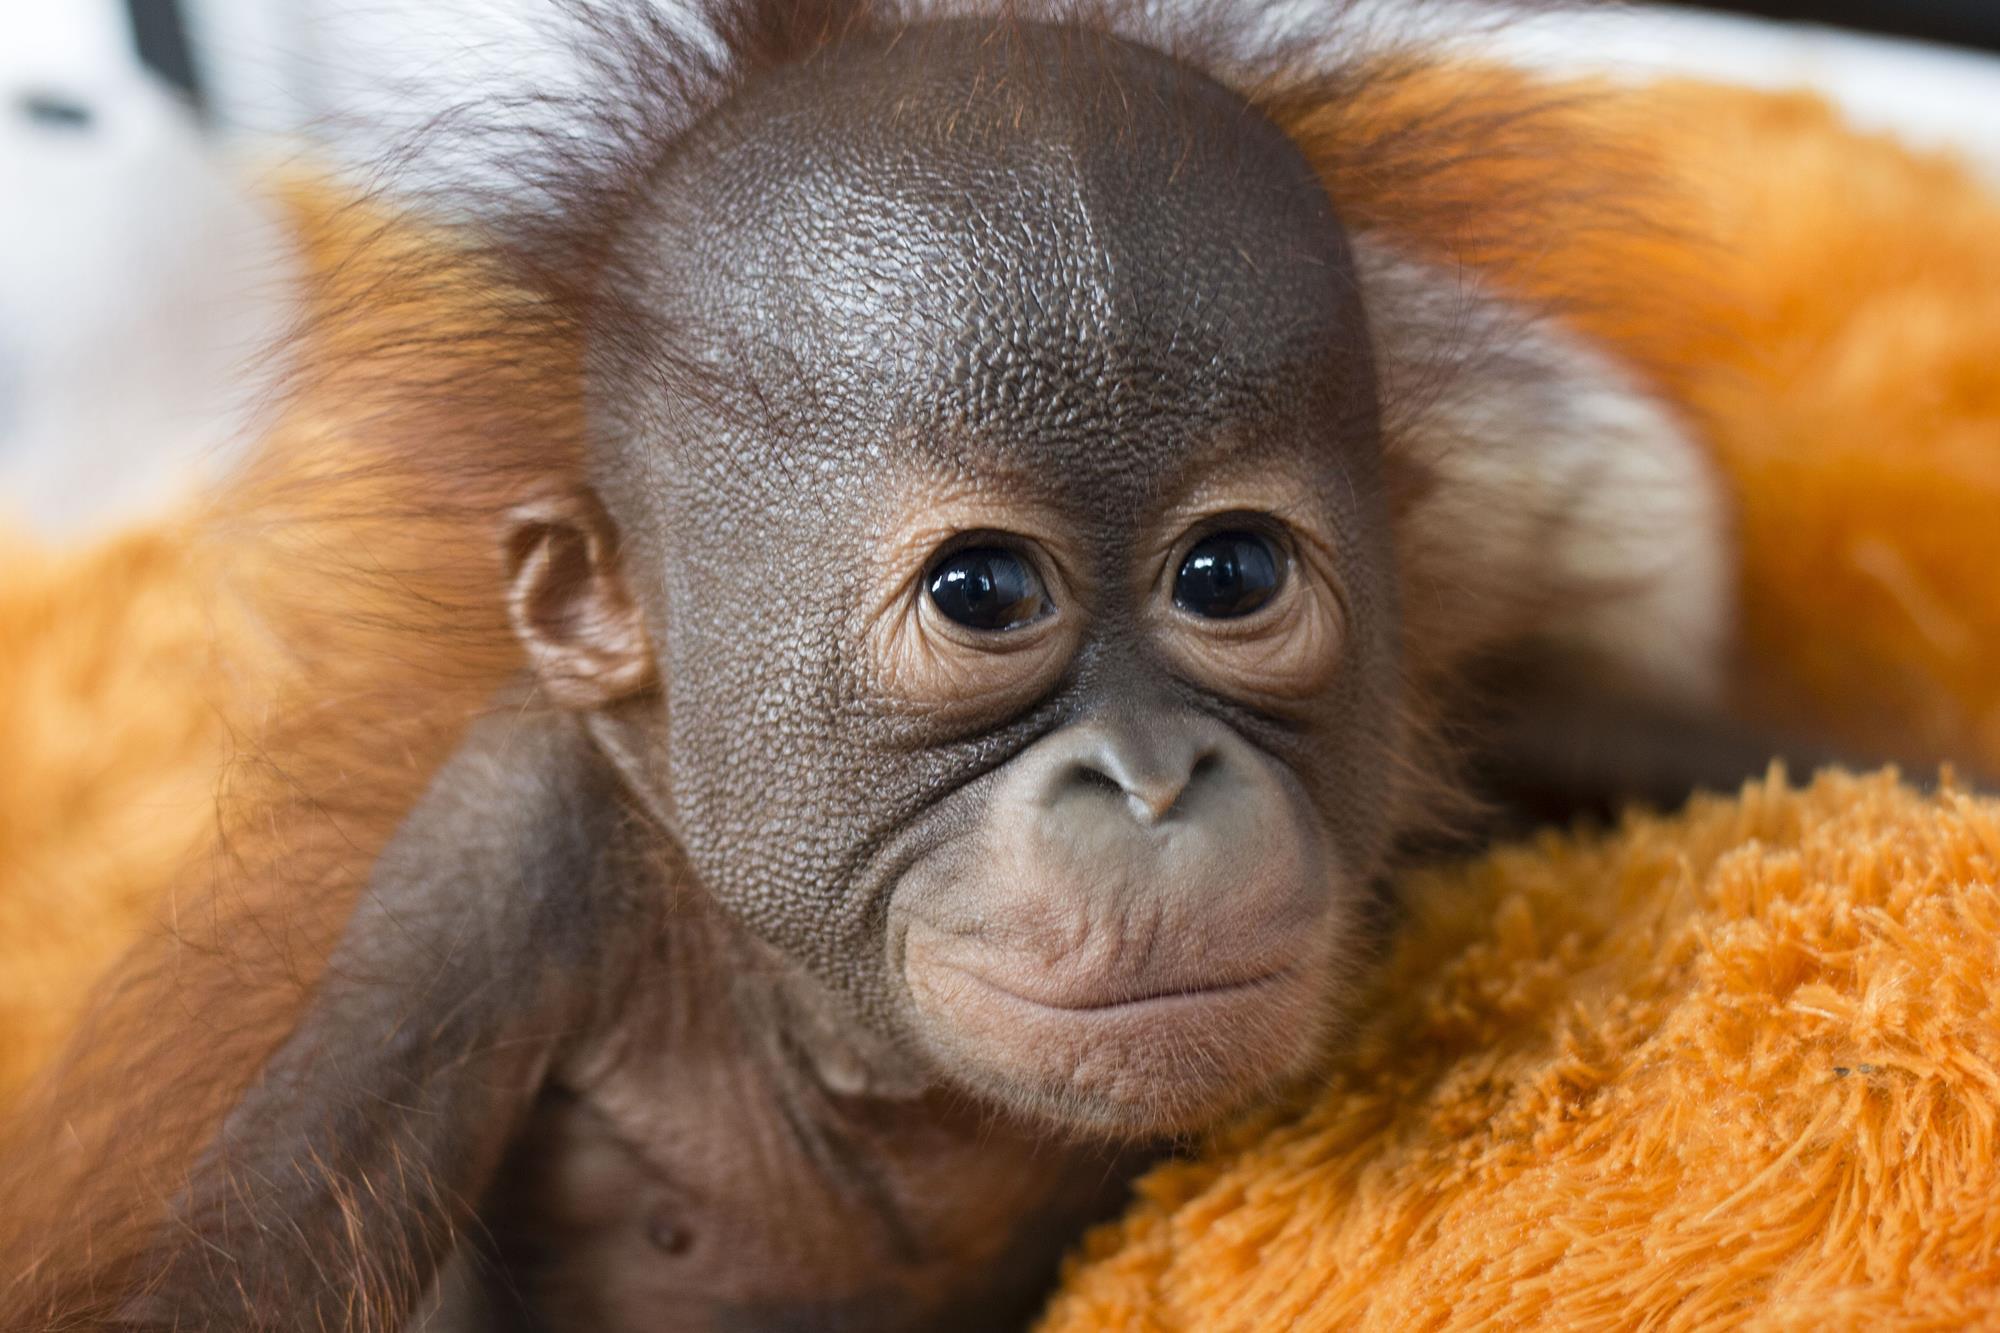  Red  Ape Saving the Orangutan  Critics Broadcast